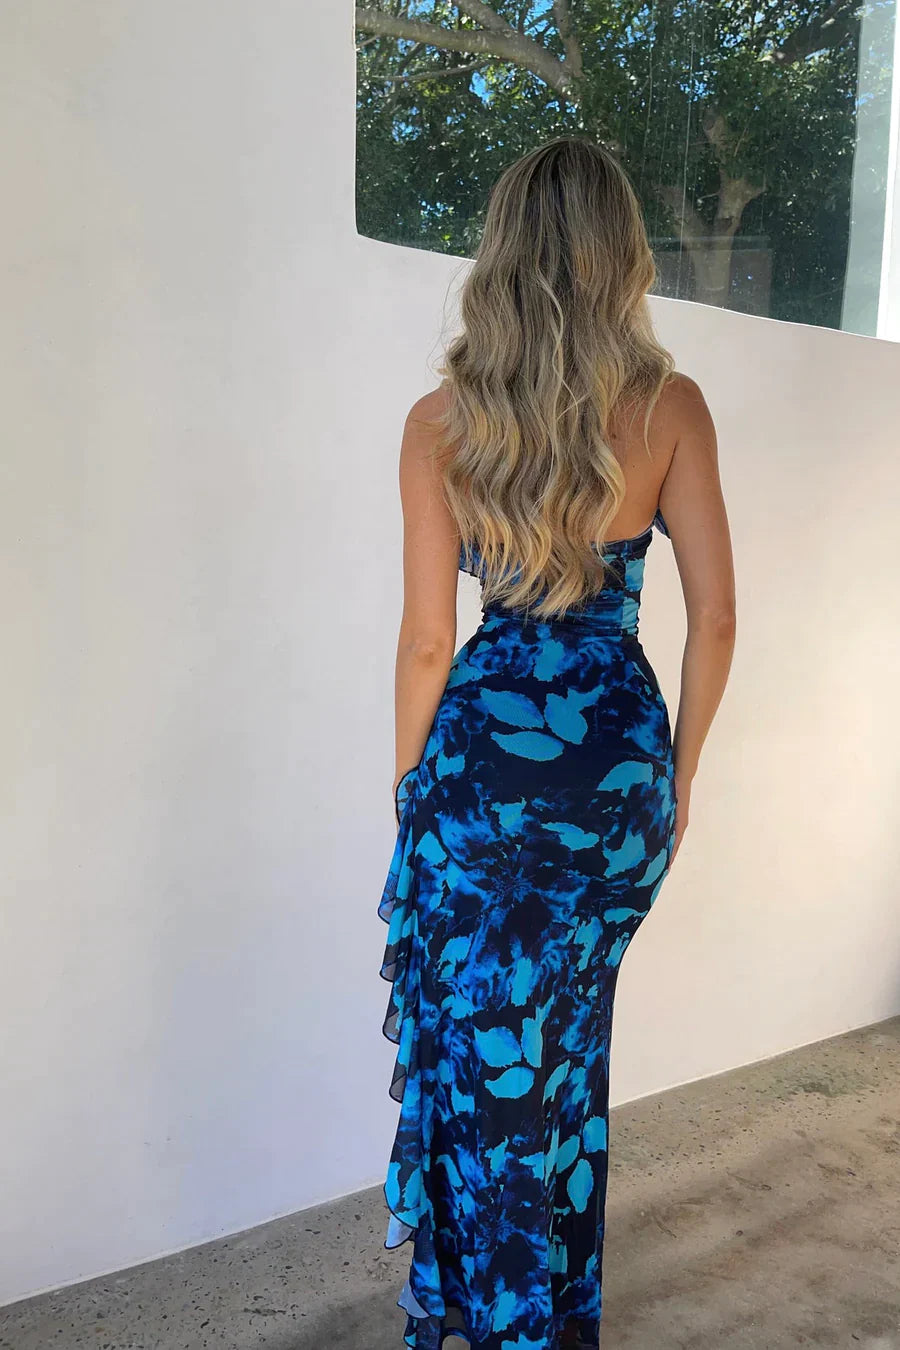 Haley - Blue Floral Dress